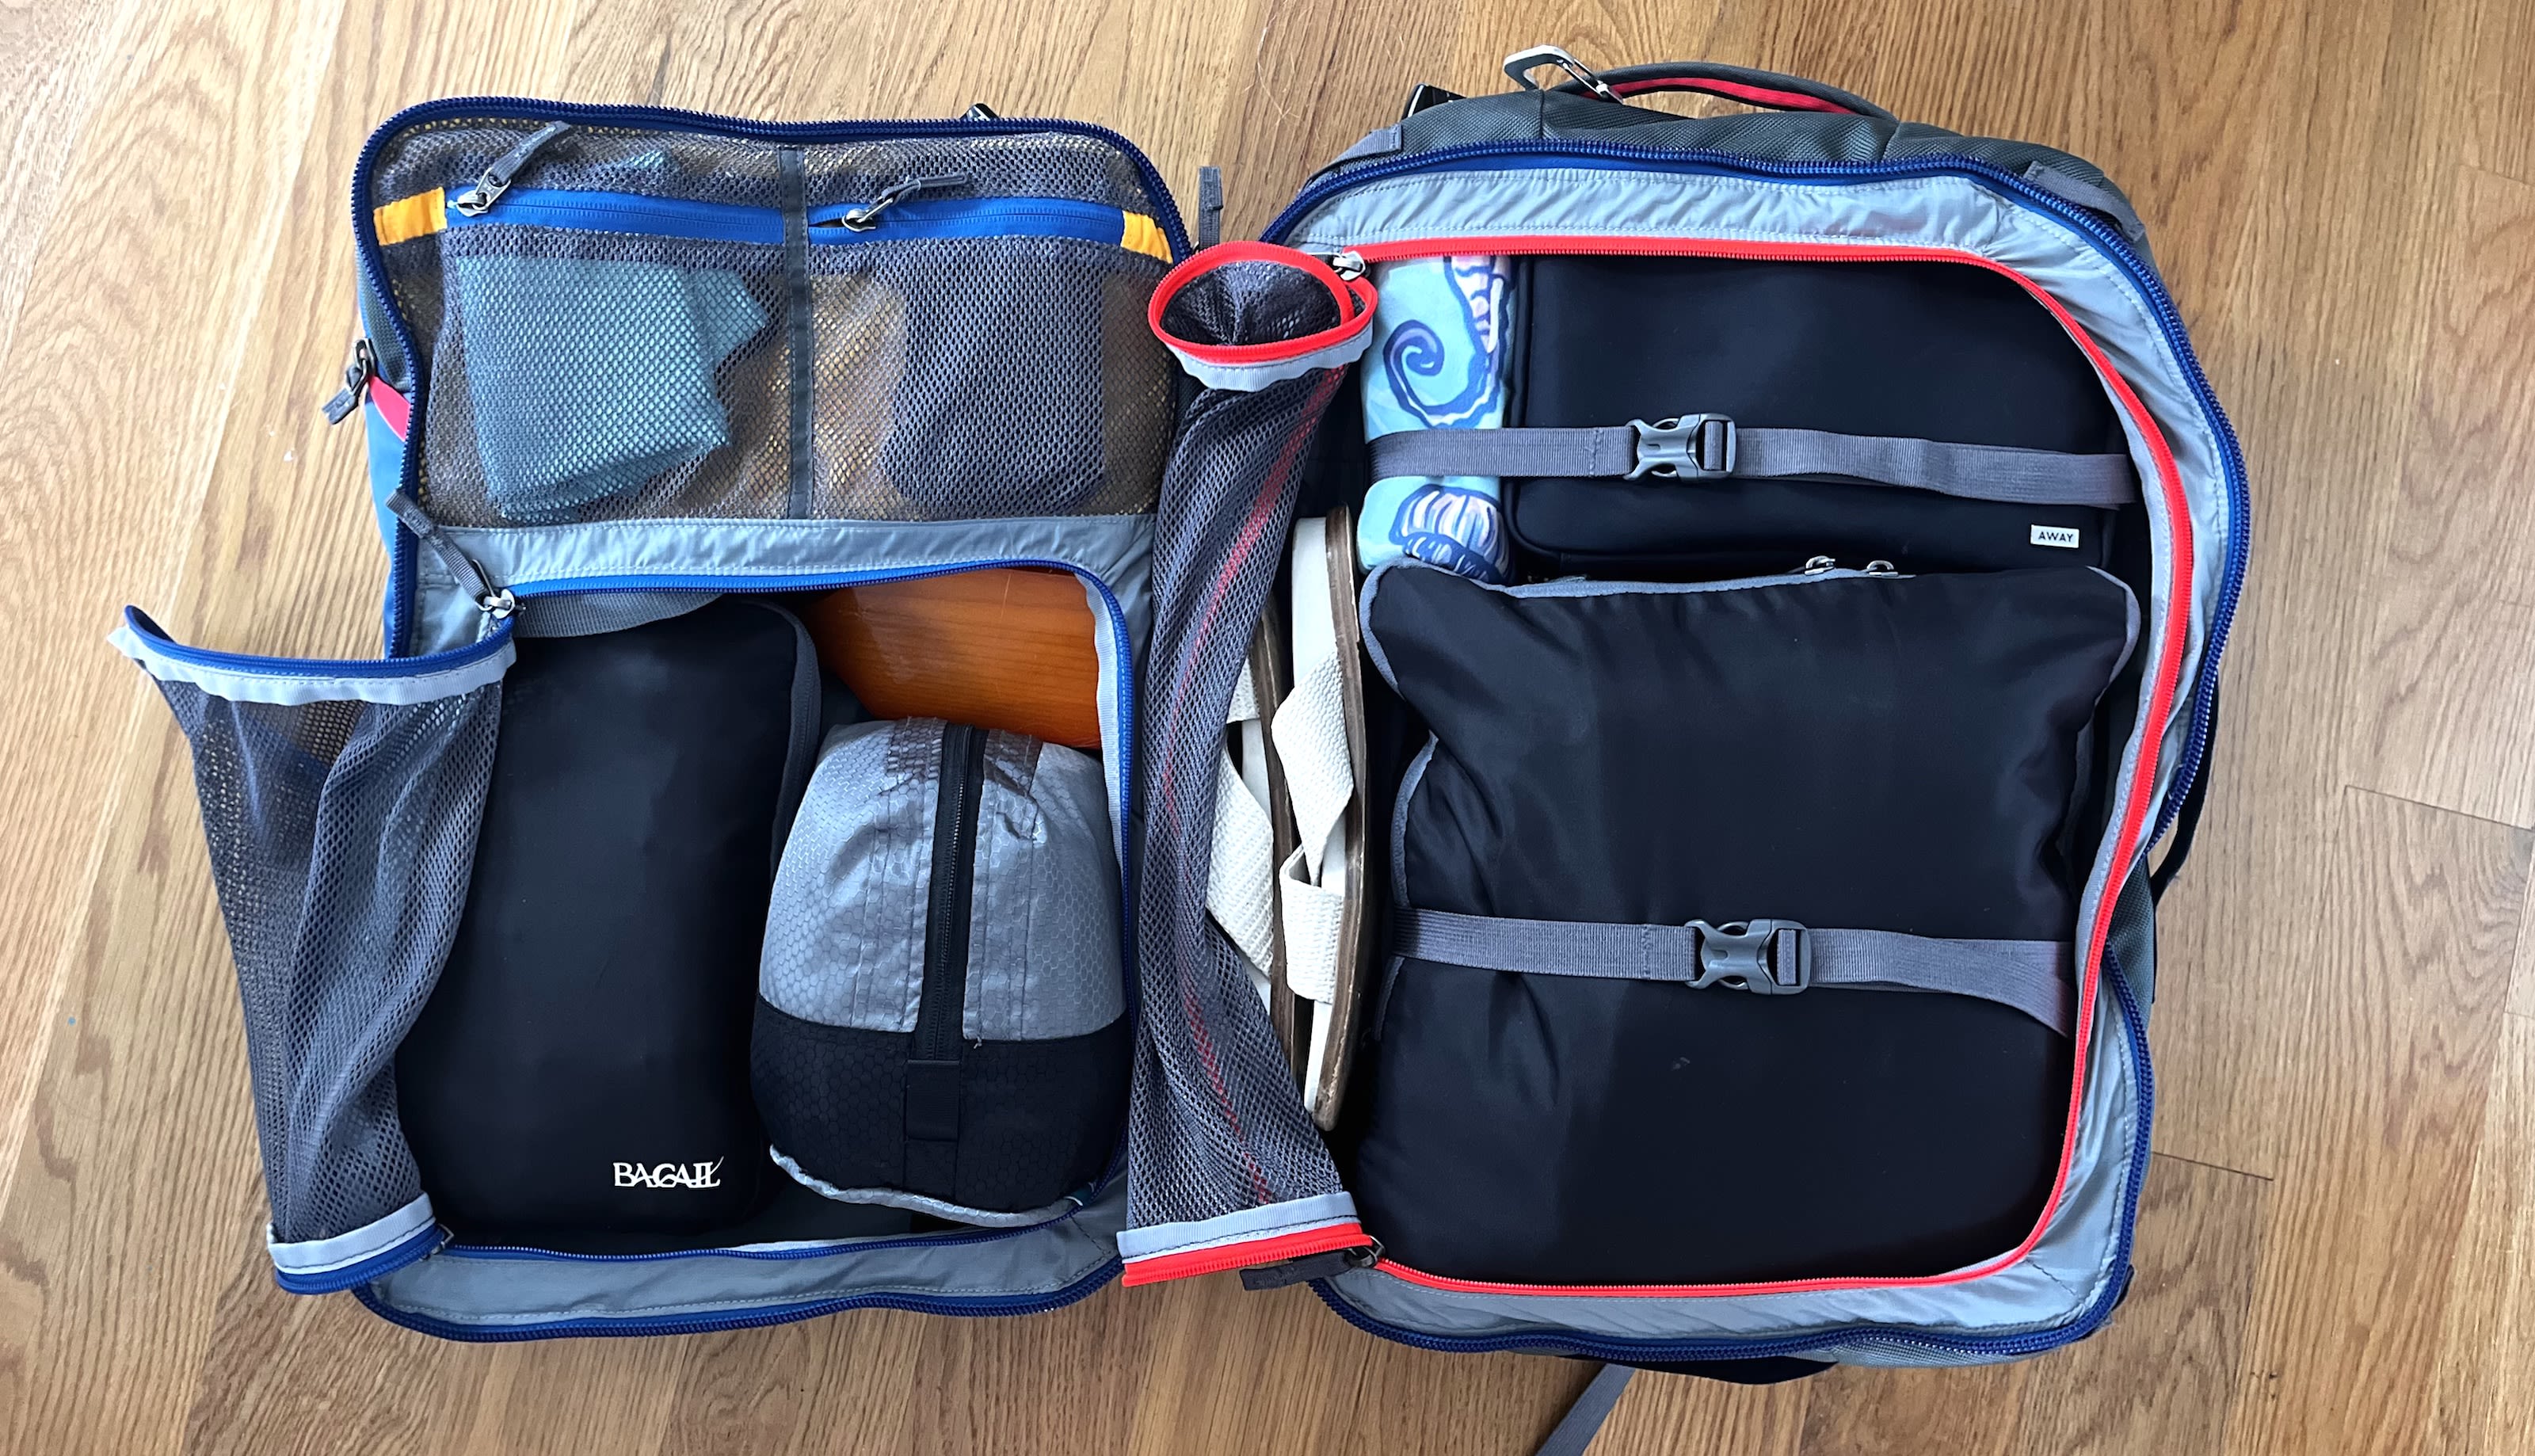 https://media.cnn.com/api/v1/images/stellar/prod/underscored-pack-europe-vacation-backpack-lead.jpg?c=original